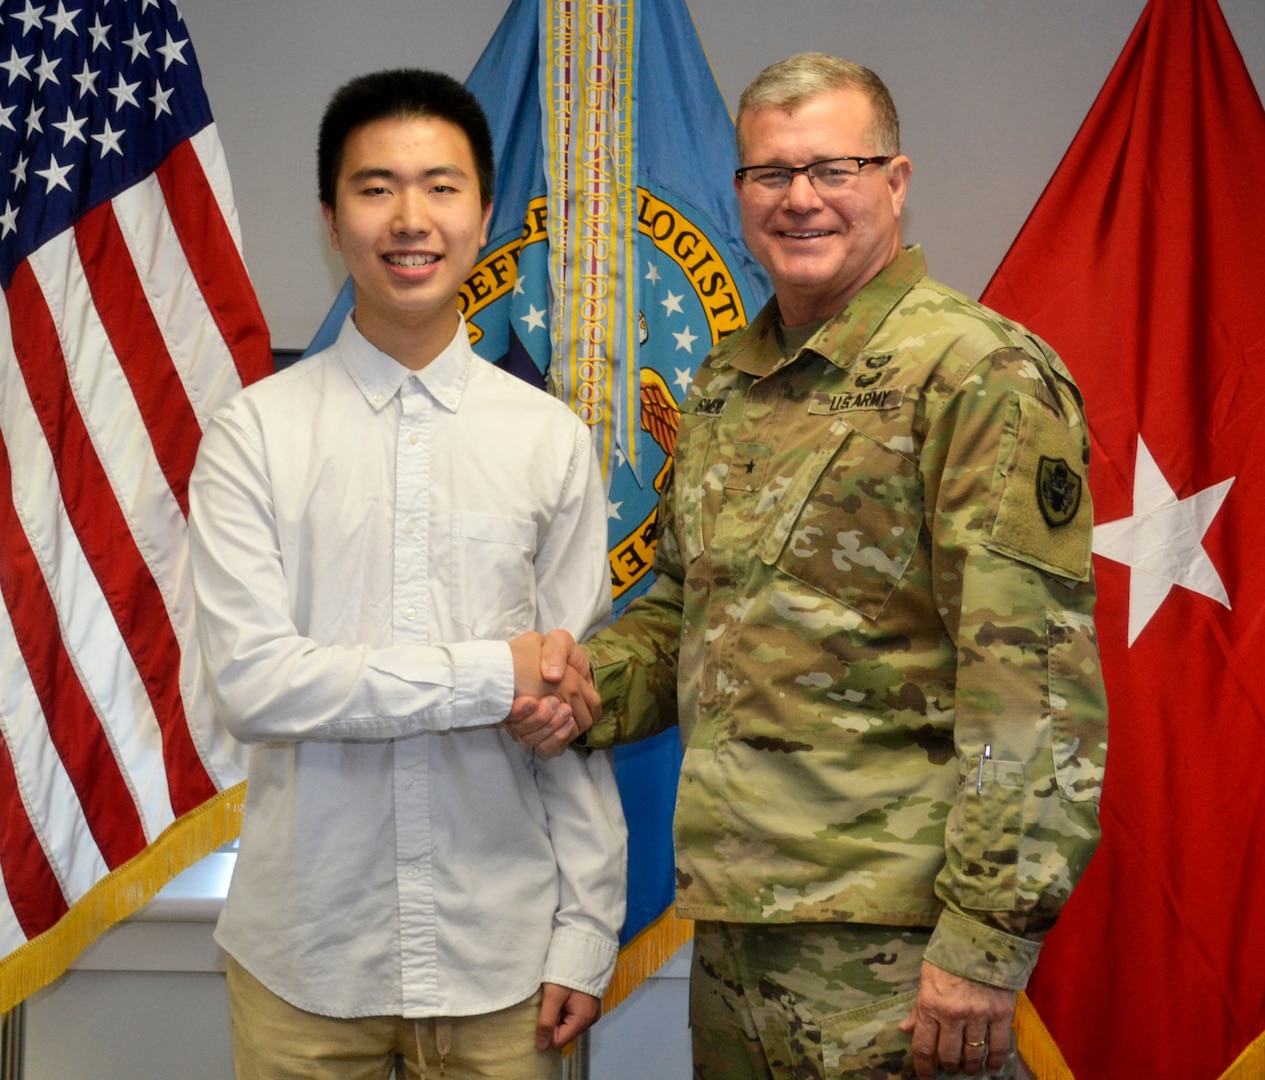 Ning Cao, a former DLA Troop Support intern, left, poses with Army Brig. Gen. Mark Simerly, DLA Troop Support Commander, right, at the DLA Troop Support June 6, 2019 in Philadelphia.